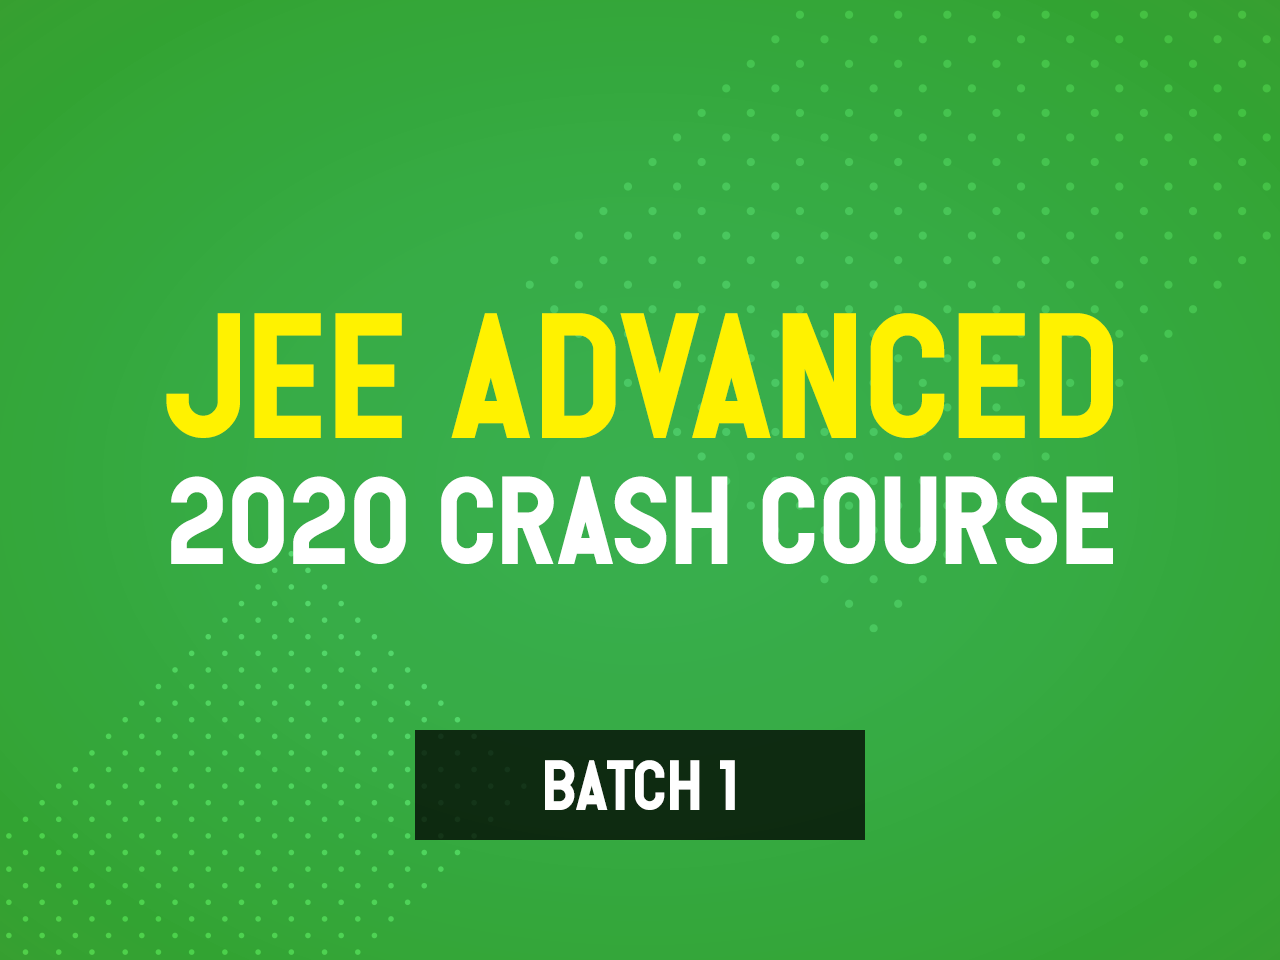 JEE Advanced Crash Course